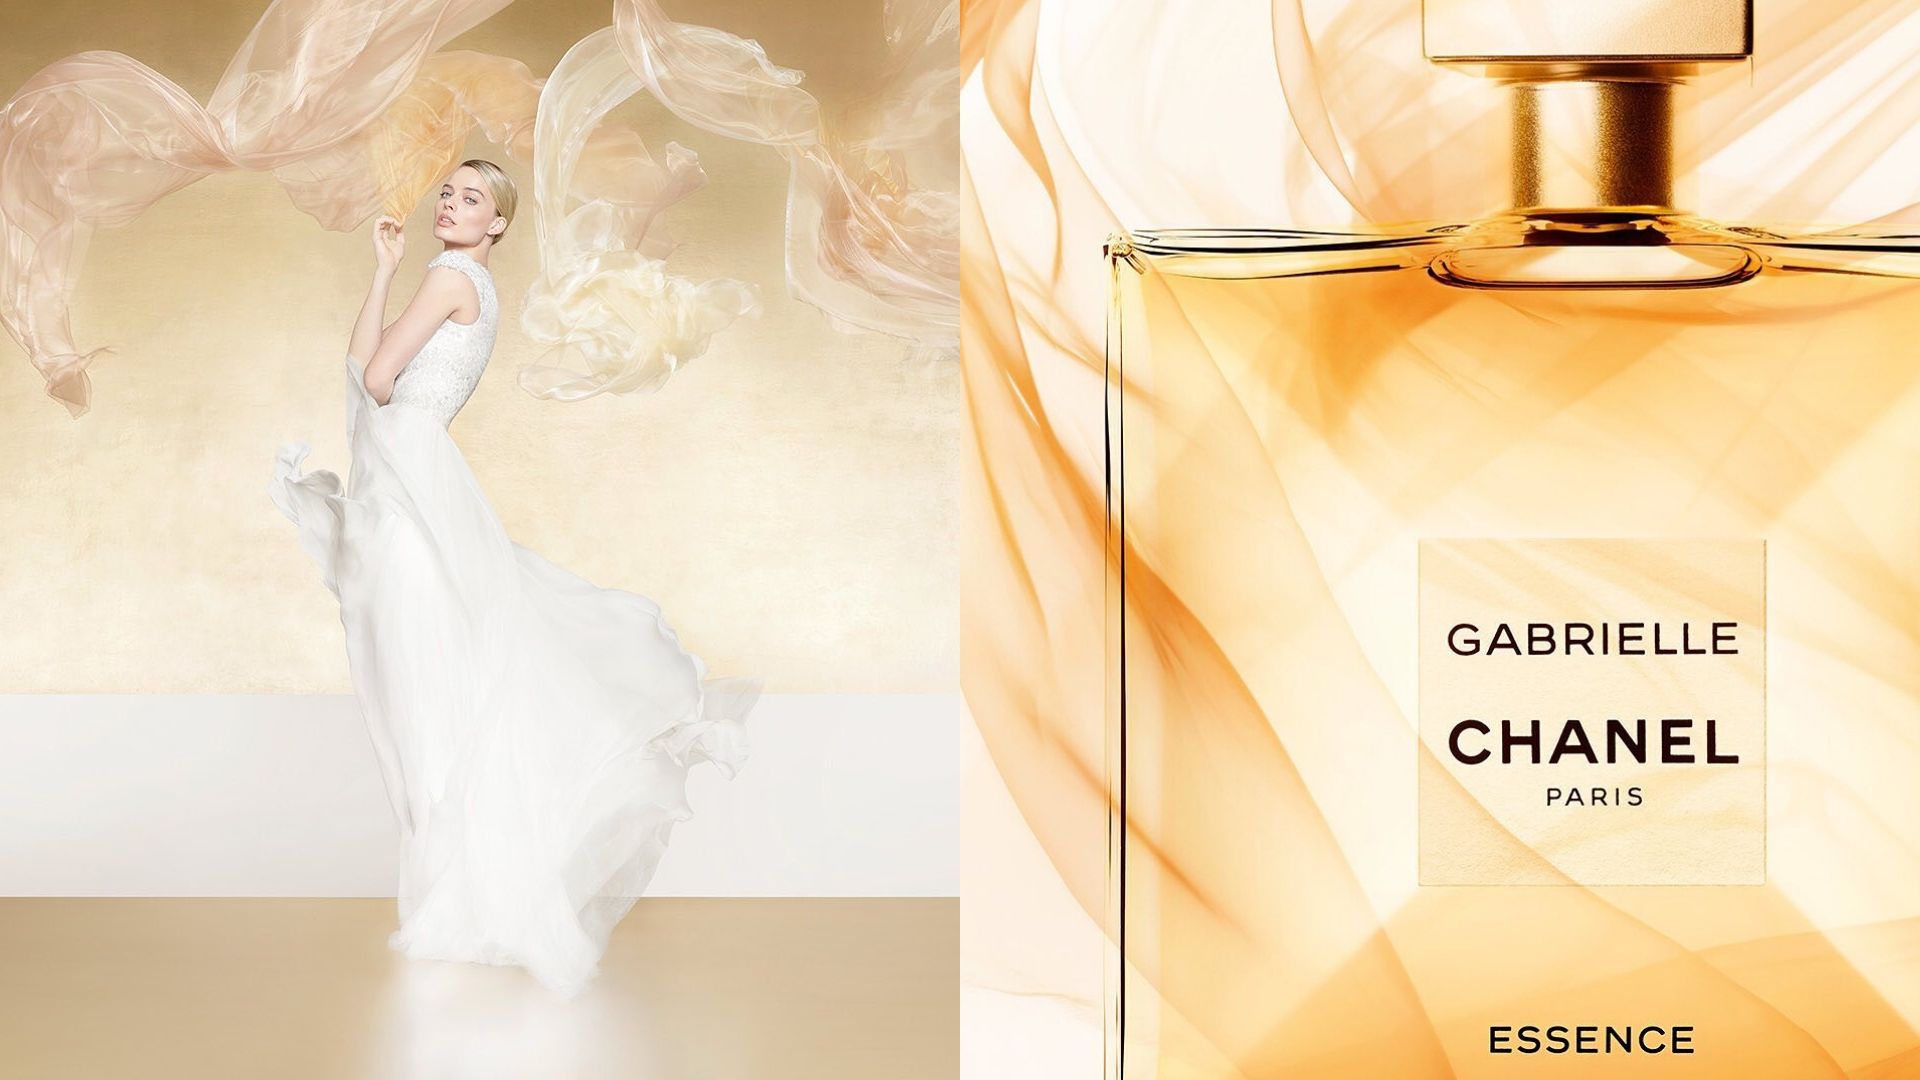 Chanel Reinvents Their Cult Classic Gabrielle Chanel Perfume | Harper's ...